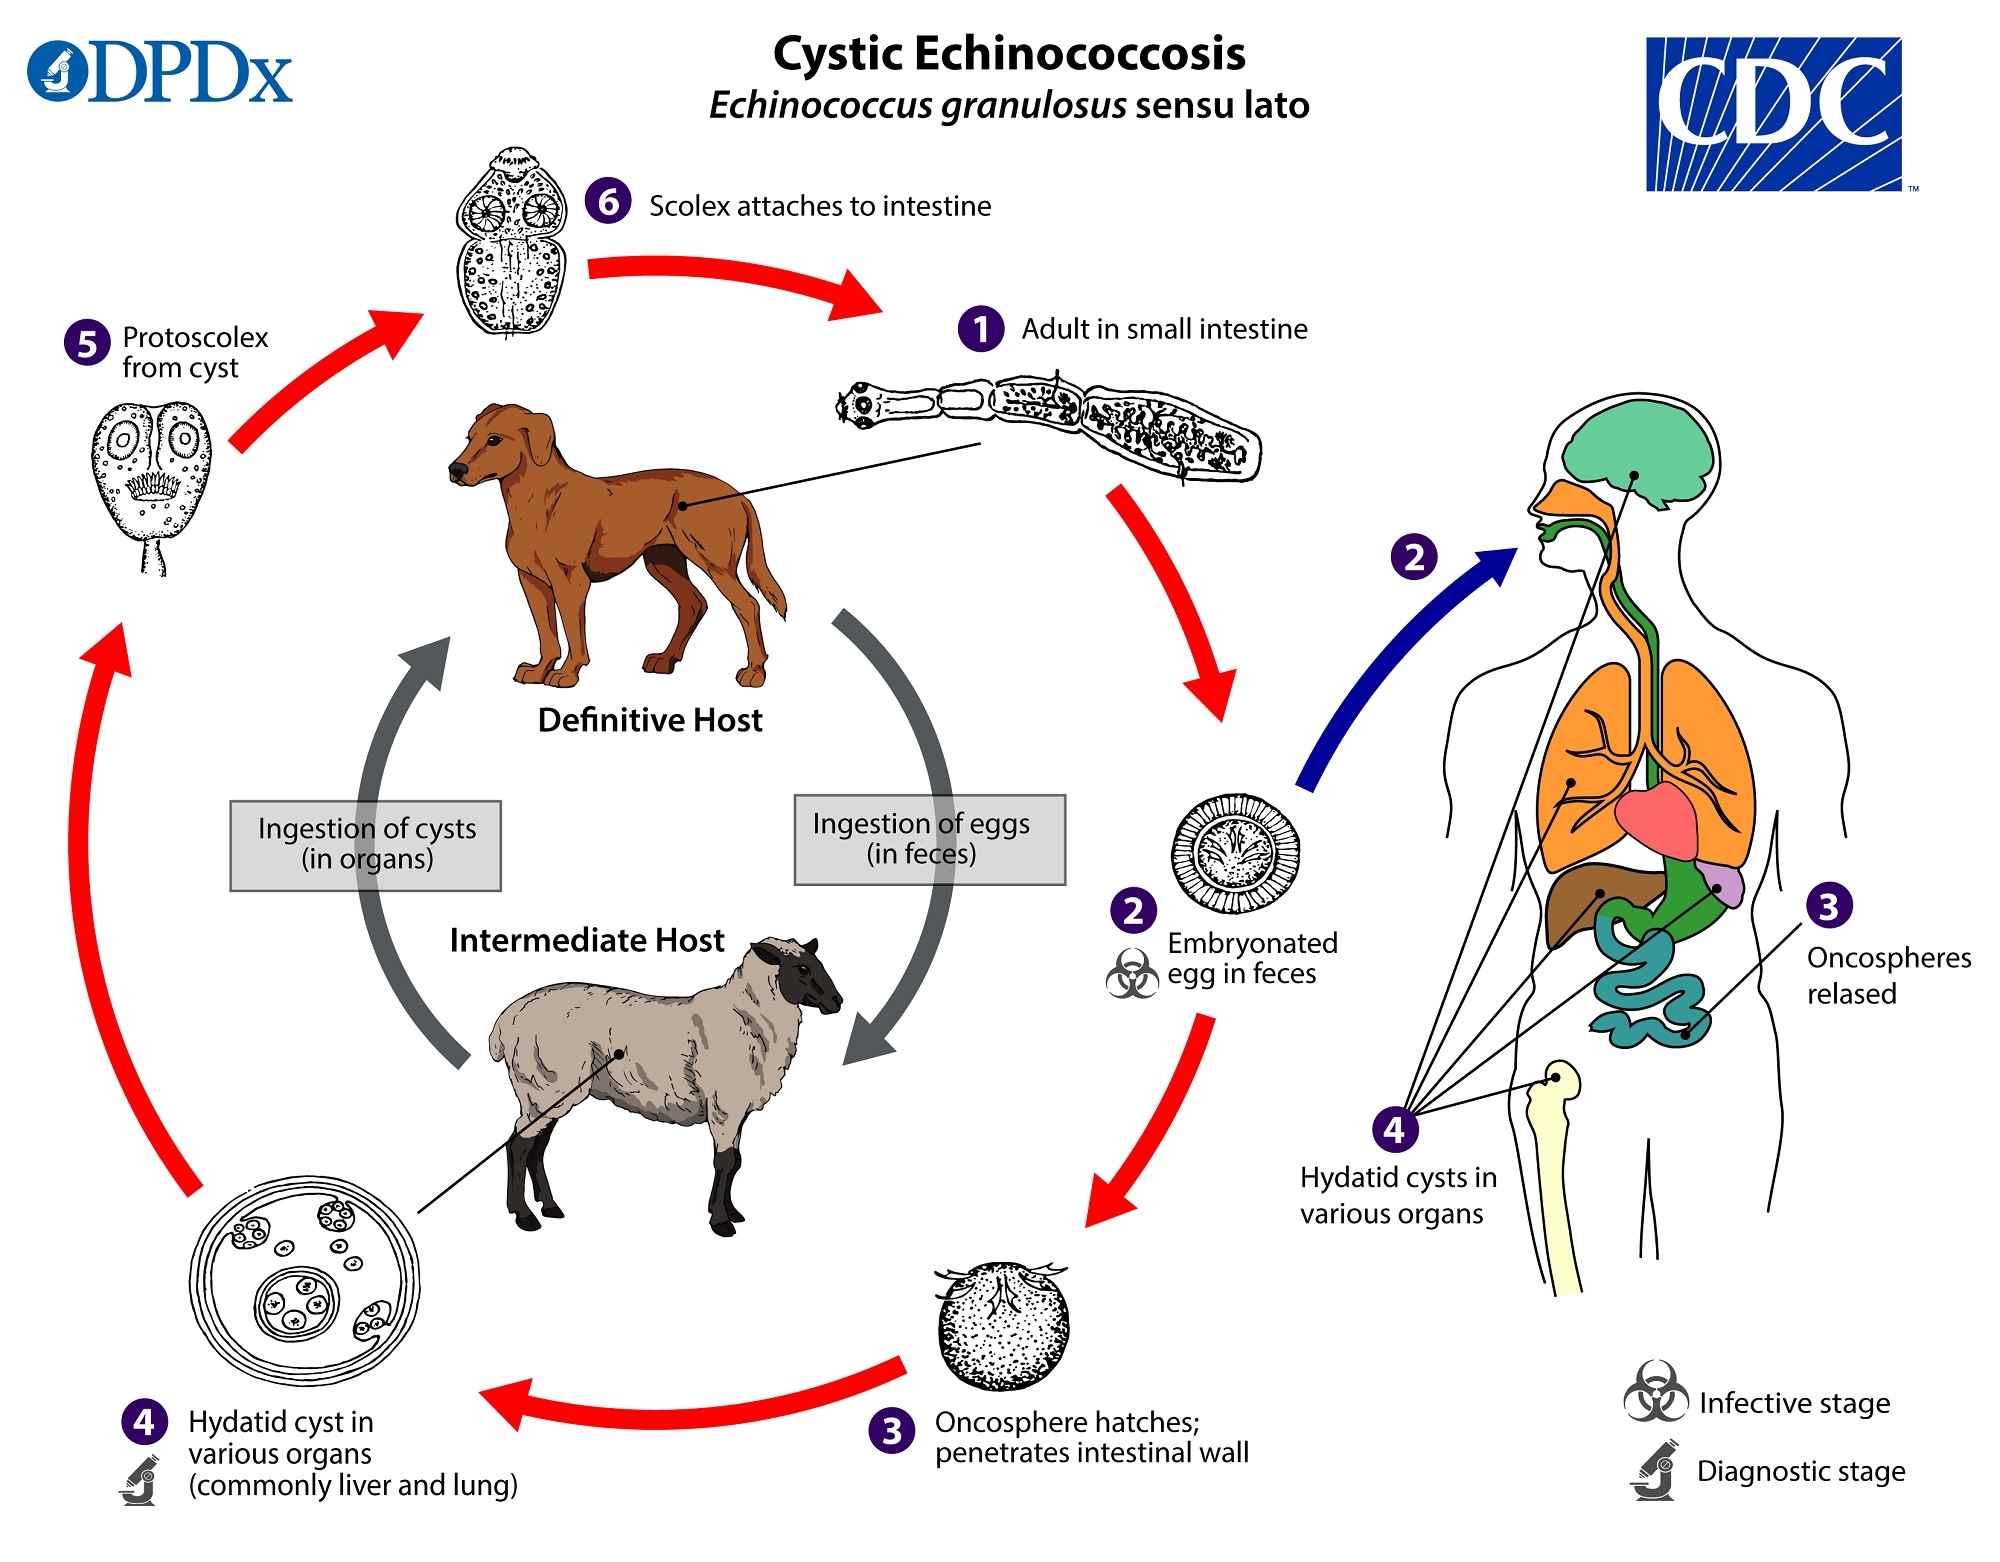 Cdc Dpdx Echinococcosis